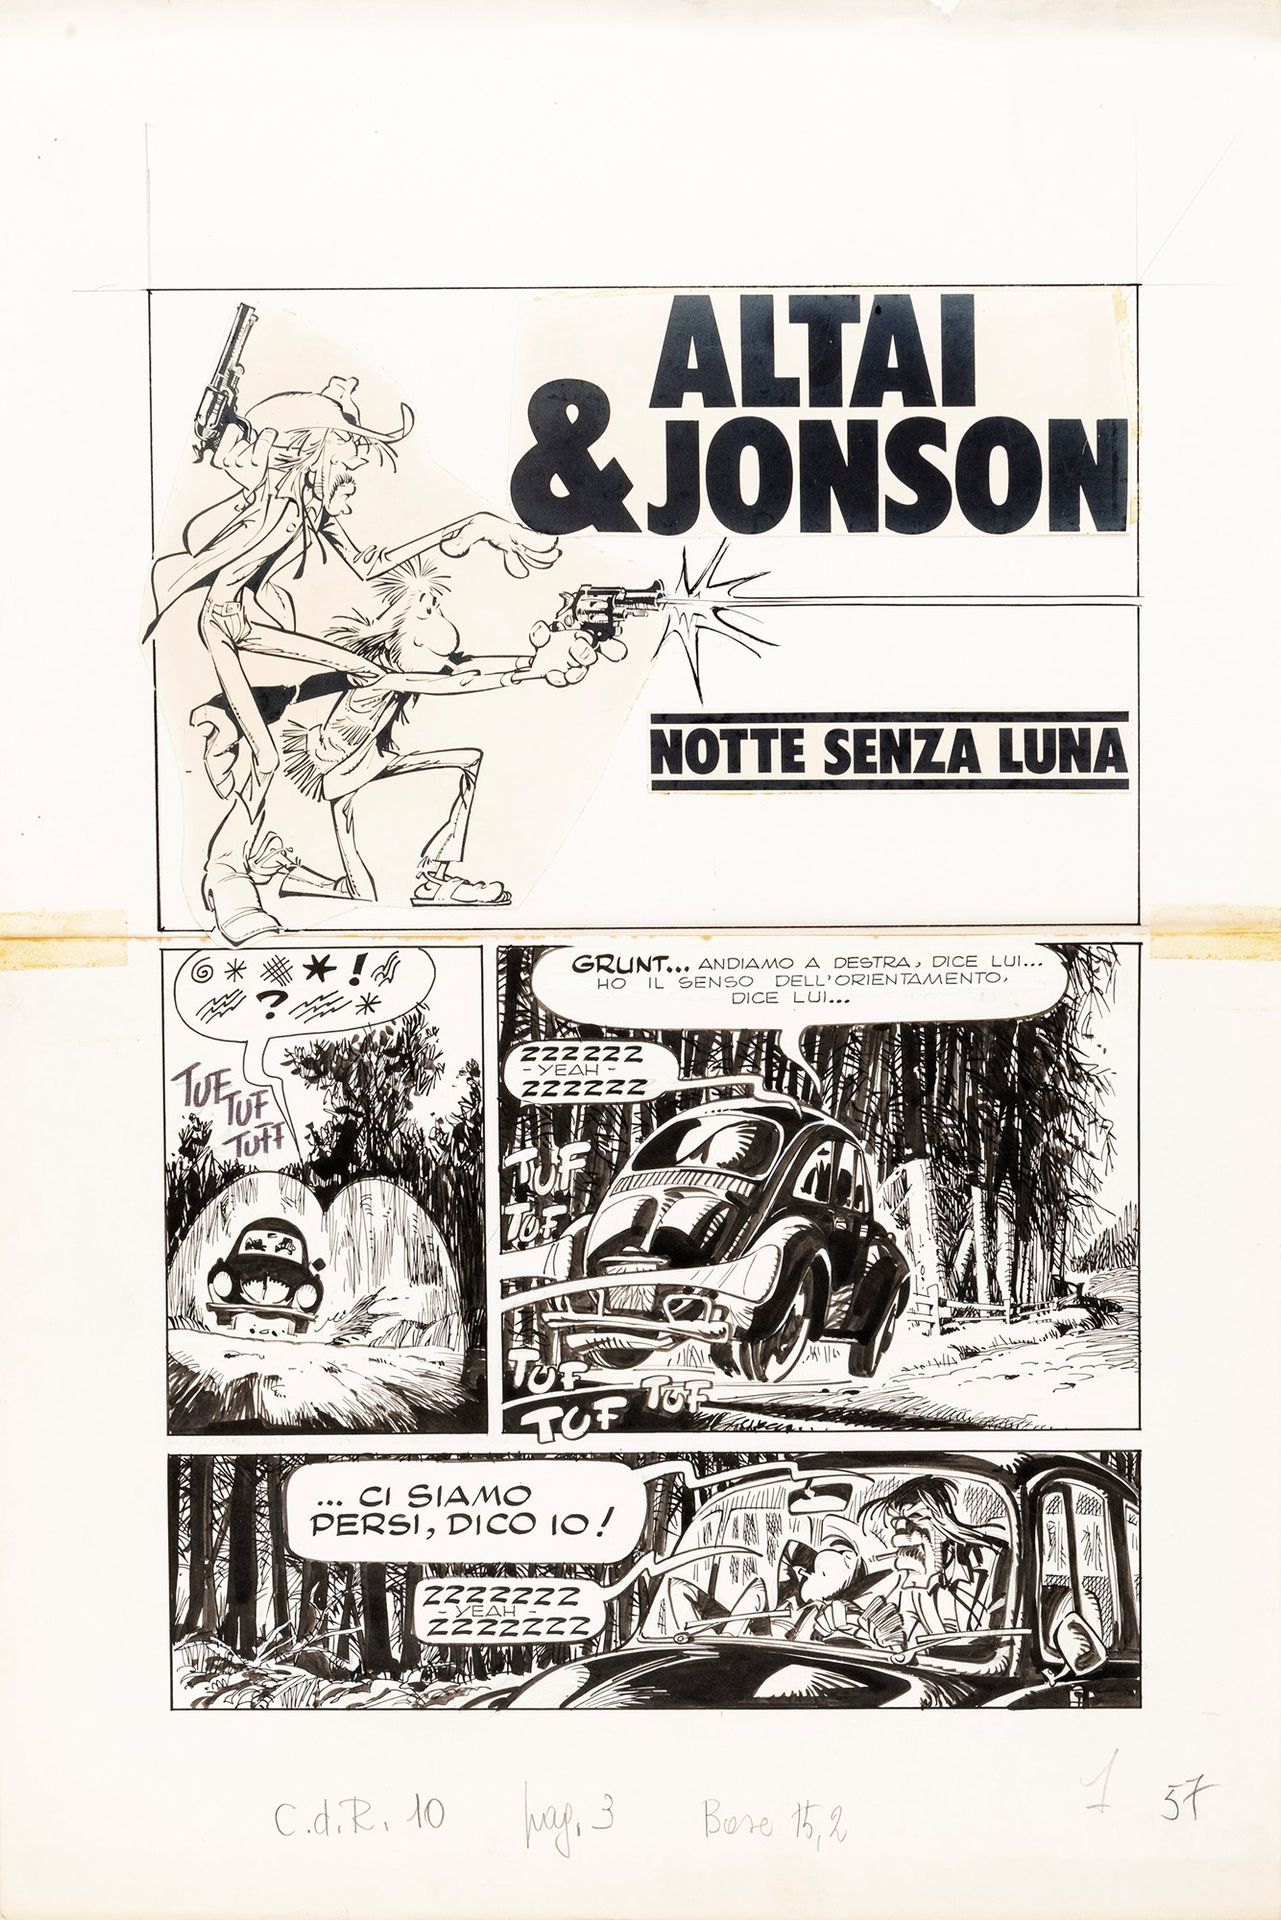 Giorgio Cavazzano Altai & Jonson - Notte senza luna, 1976

crayon et encre sur c&hellip;